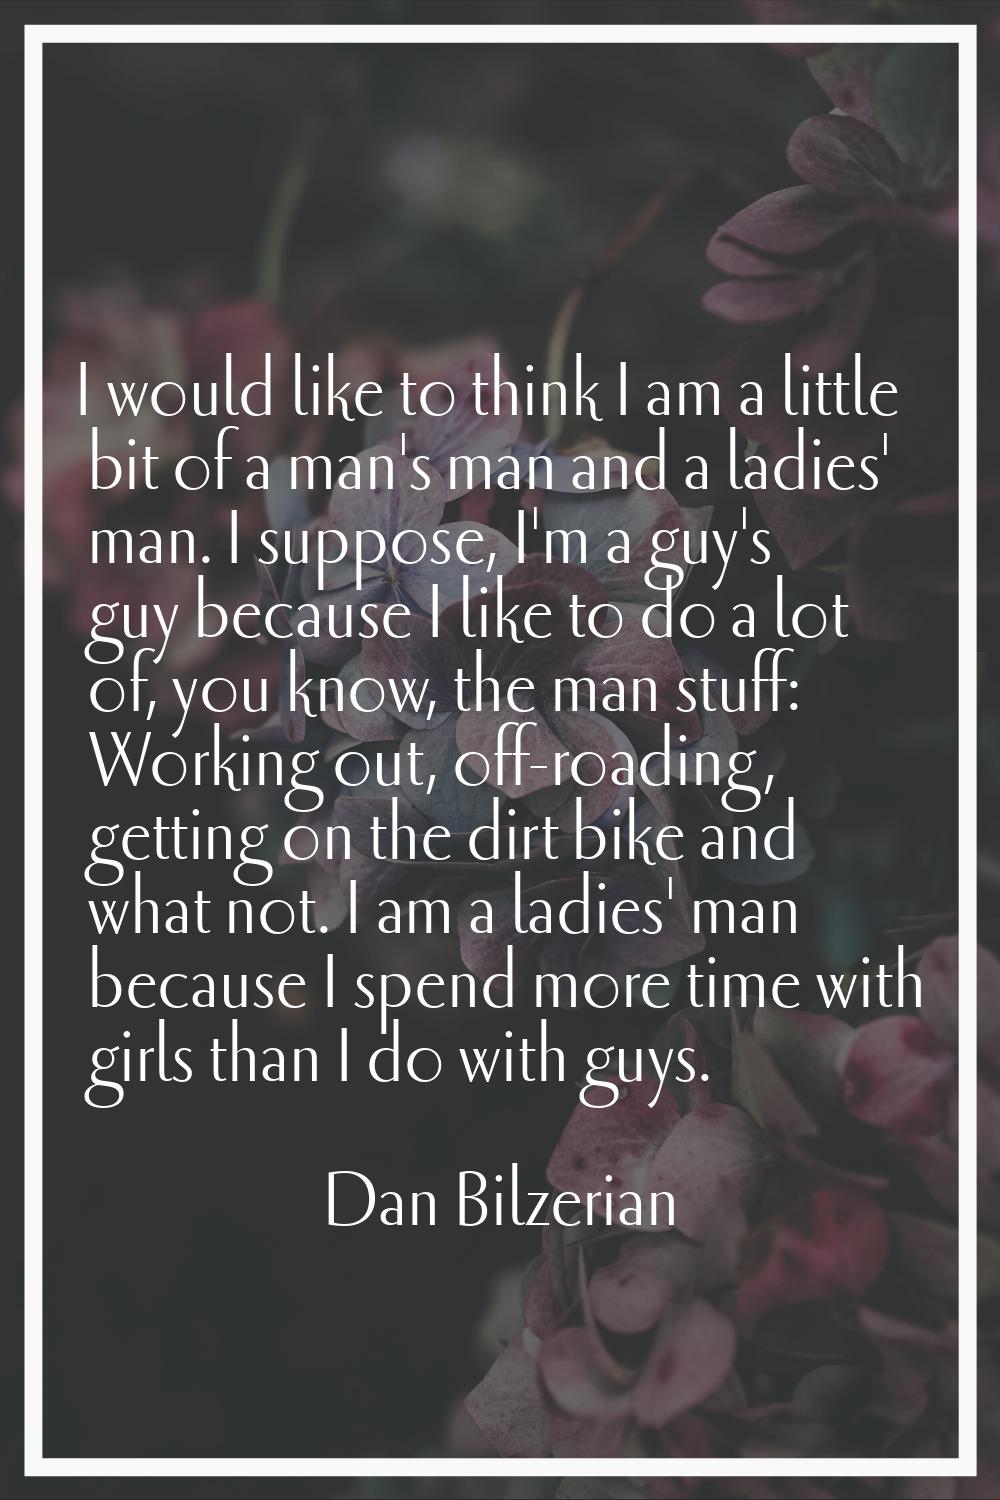 I would like to think I am a little bit of a man's man and a ladies' man. I suppose, I'm a guy's gu